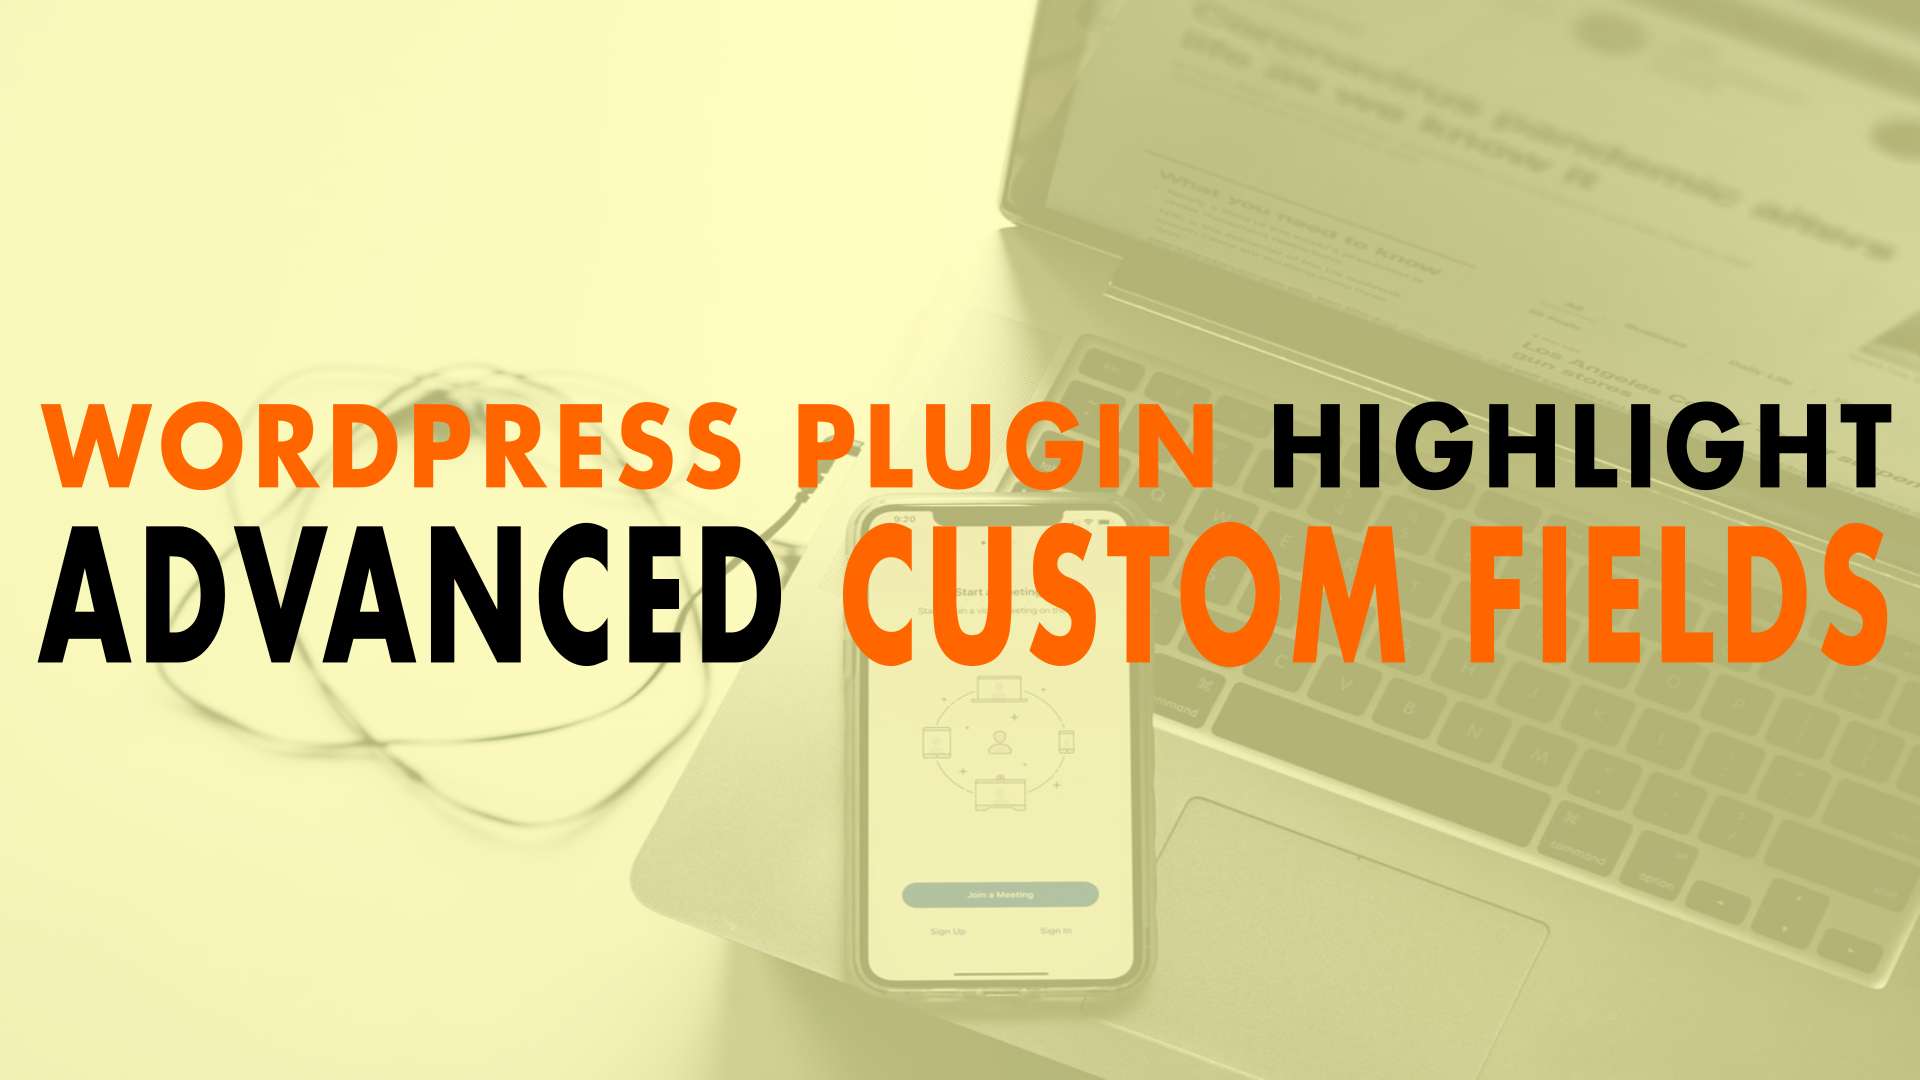 Wordpress Plugin Highlight Advanced Custom Fields Ep 662 Wp The Podcast